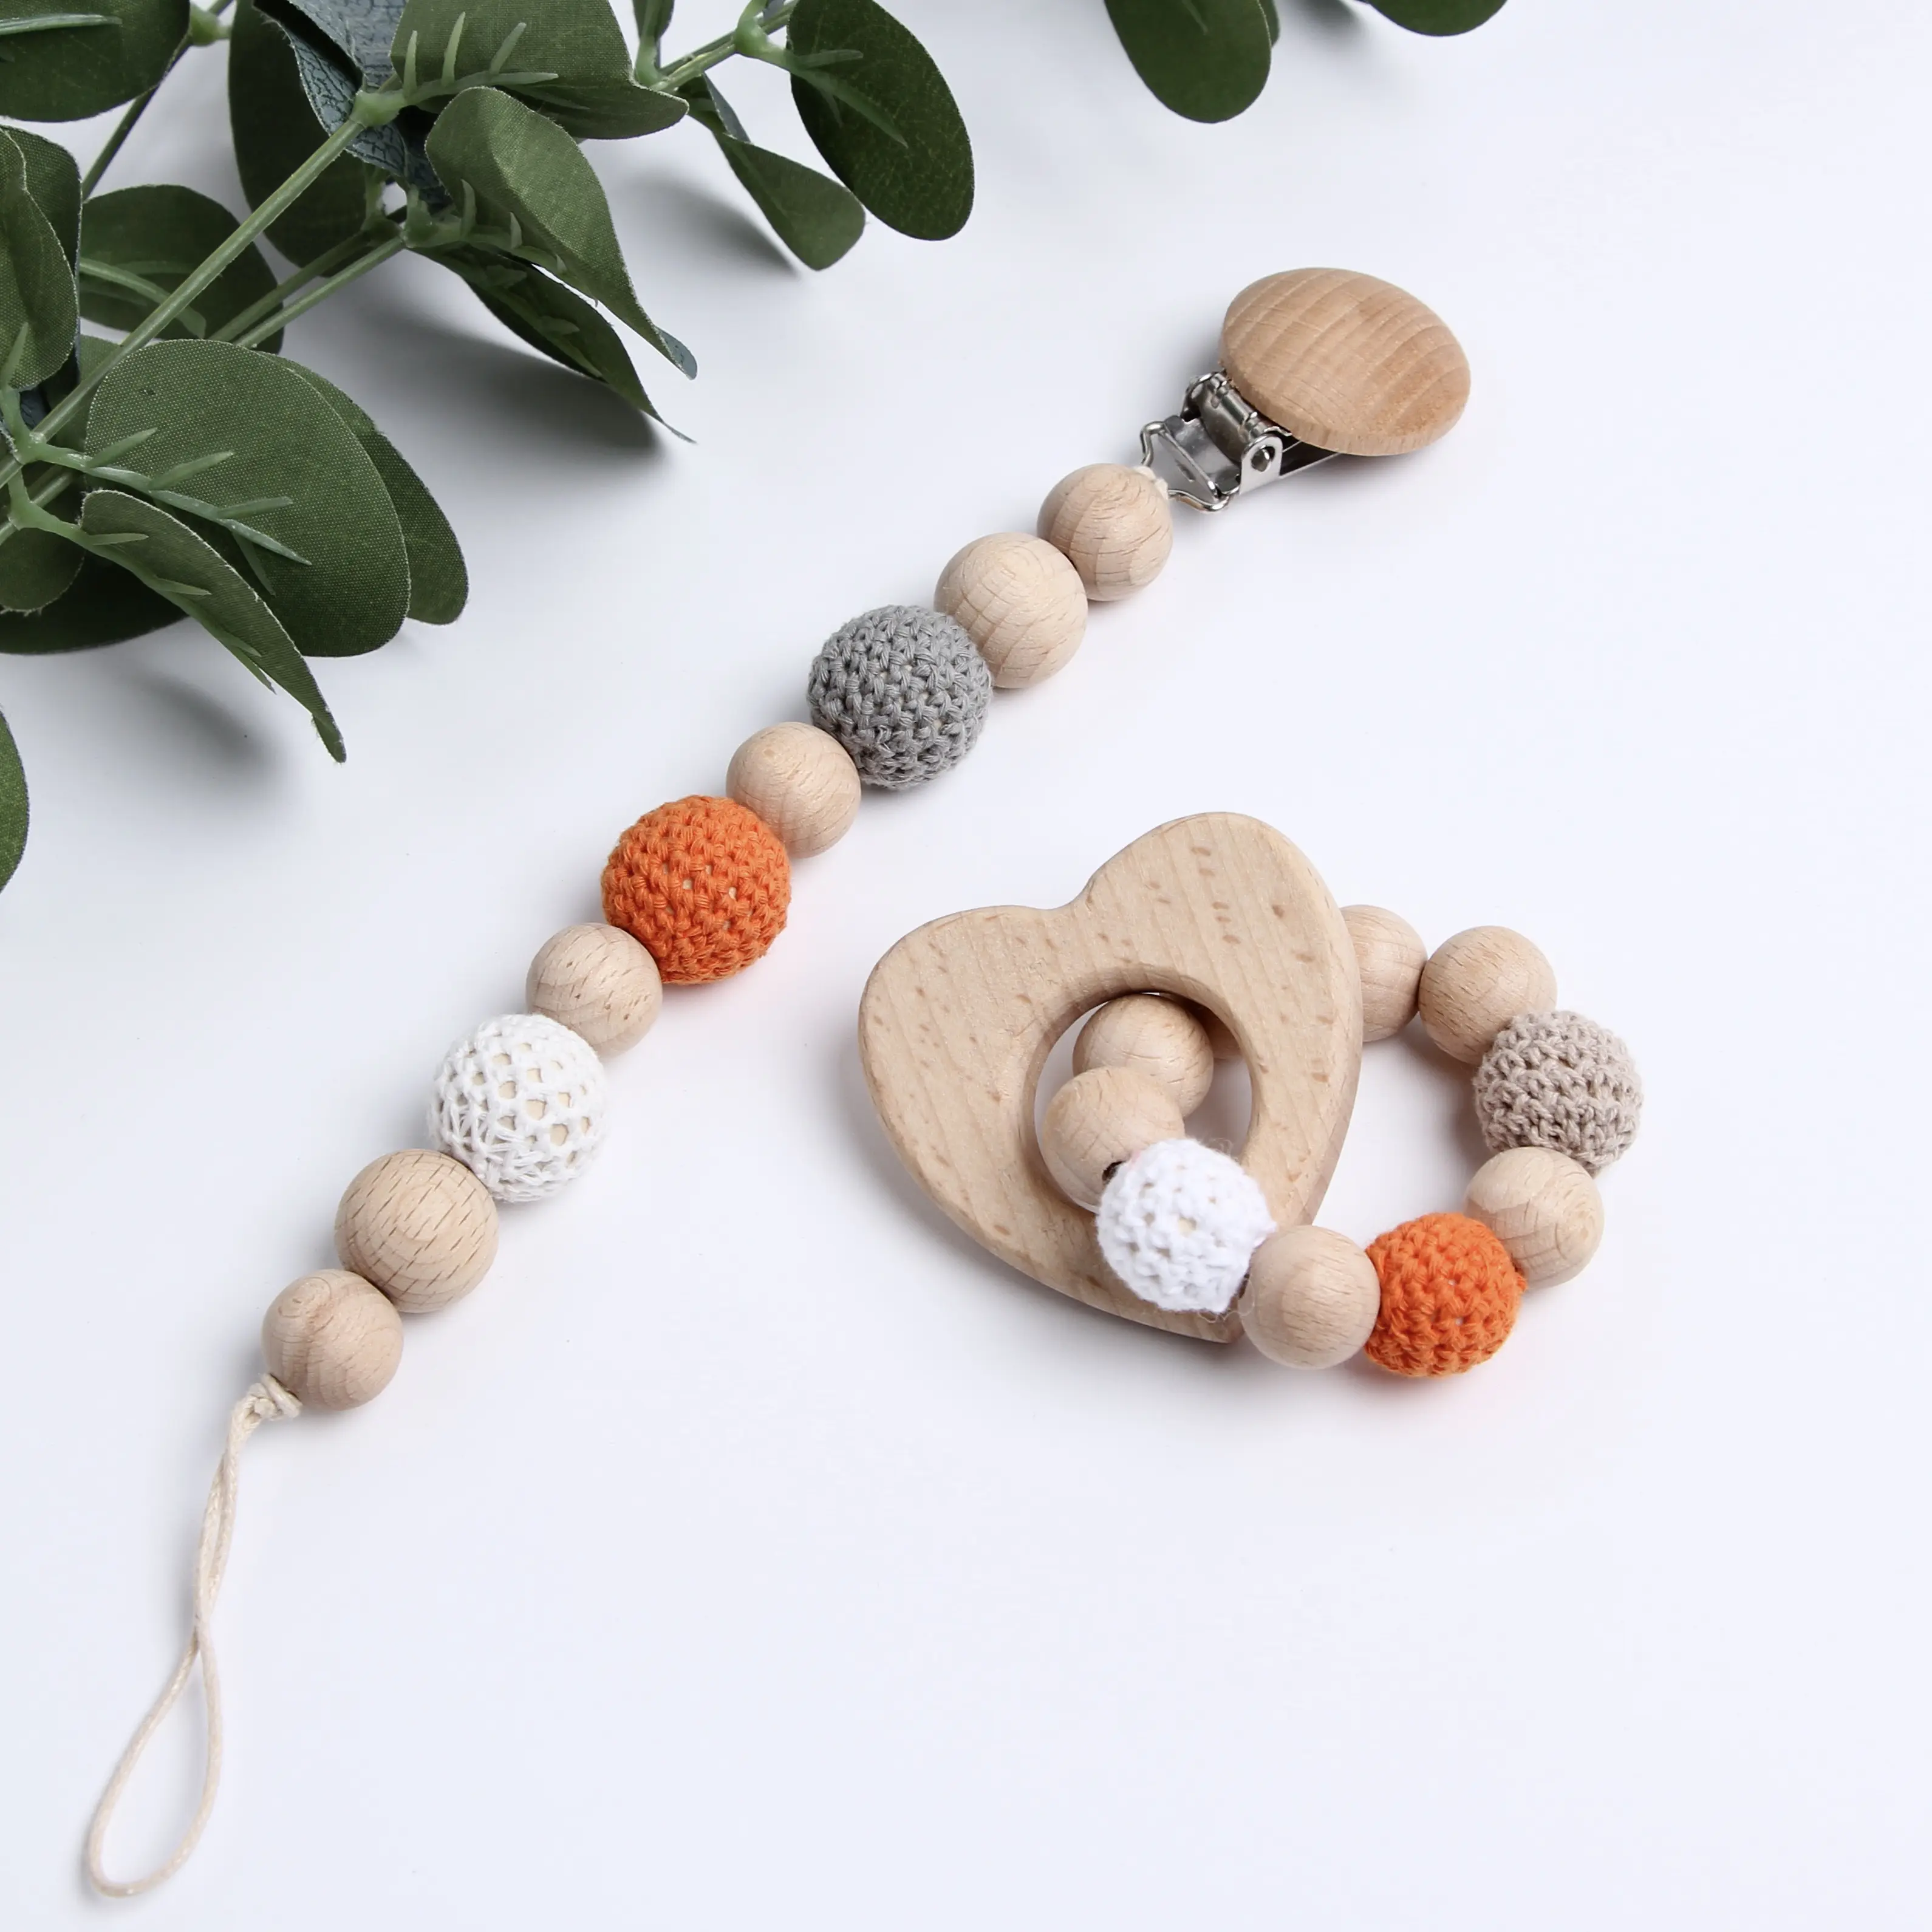 थोक हाथी कोअला बच्चे Crochet मोती Teether लकड़ी अंगूठी झुनझुने शुरुआती कंगन कंगन teether झुनझुने